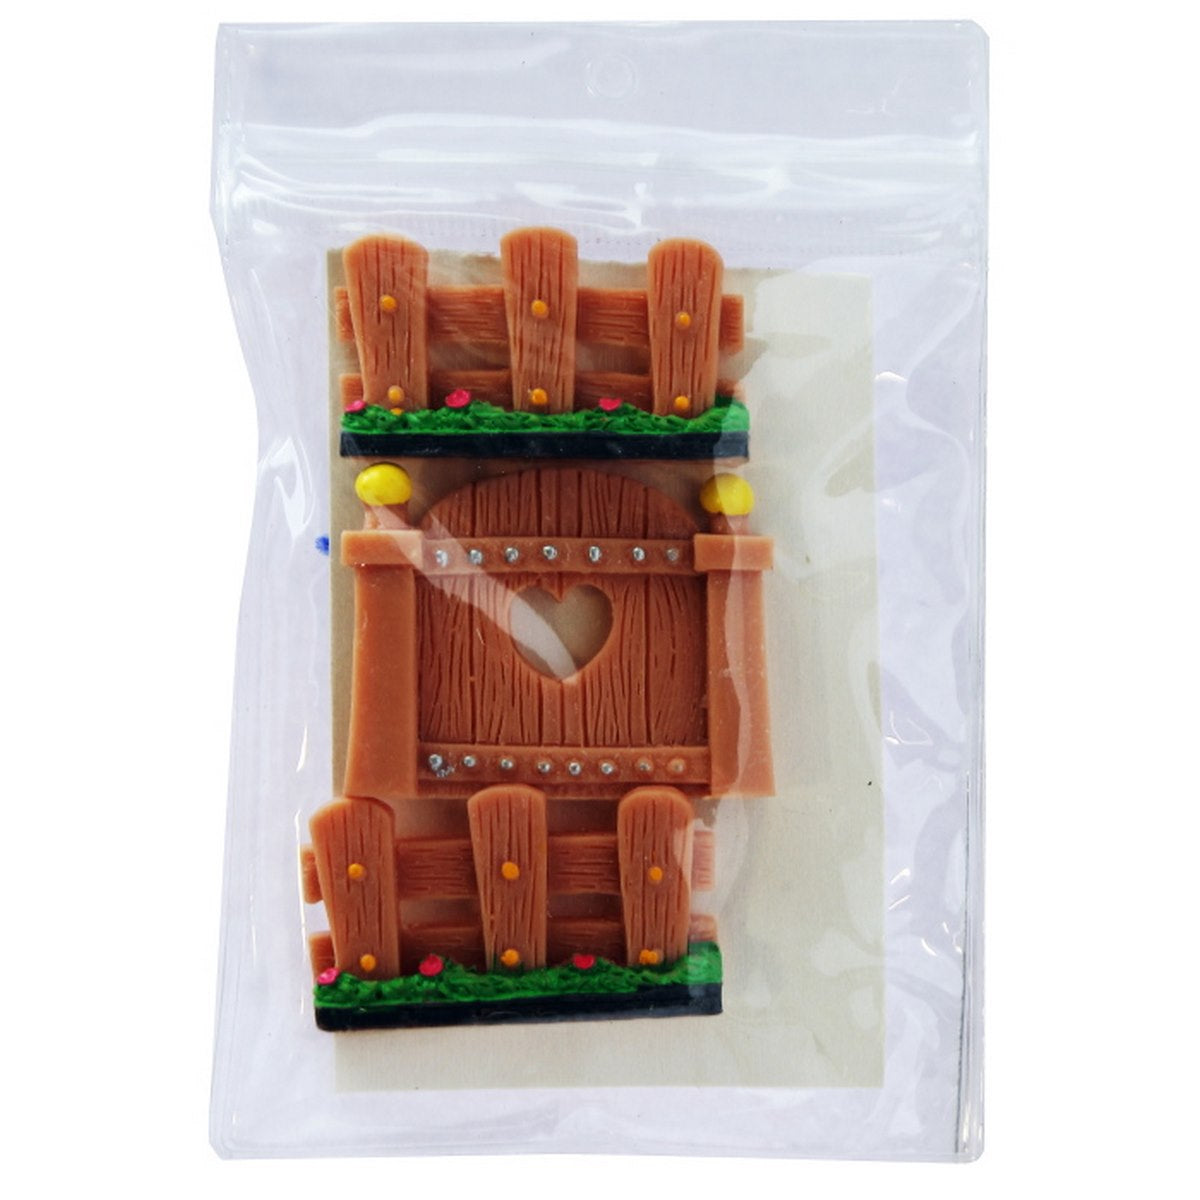 jags-mumbai Miniature Model Accessories Boundary Gate Peach |Miniature collection 1pcs BG1P-2